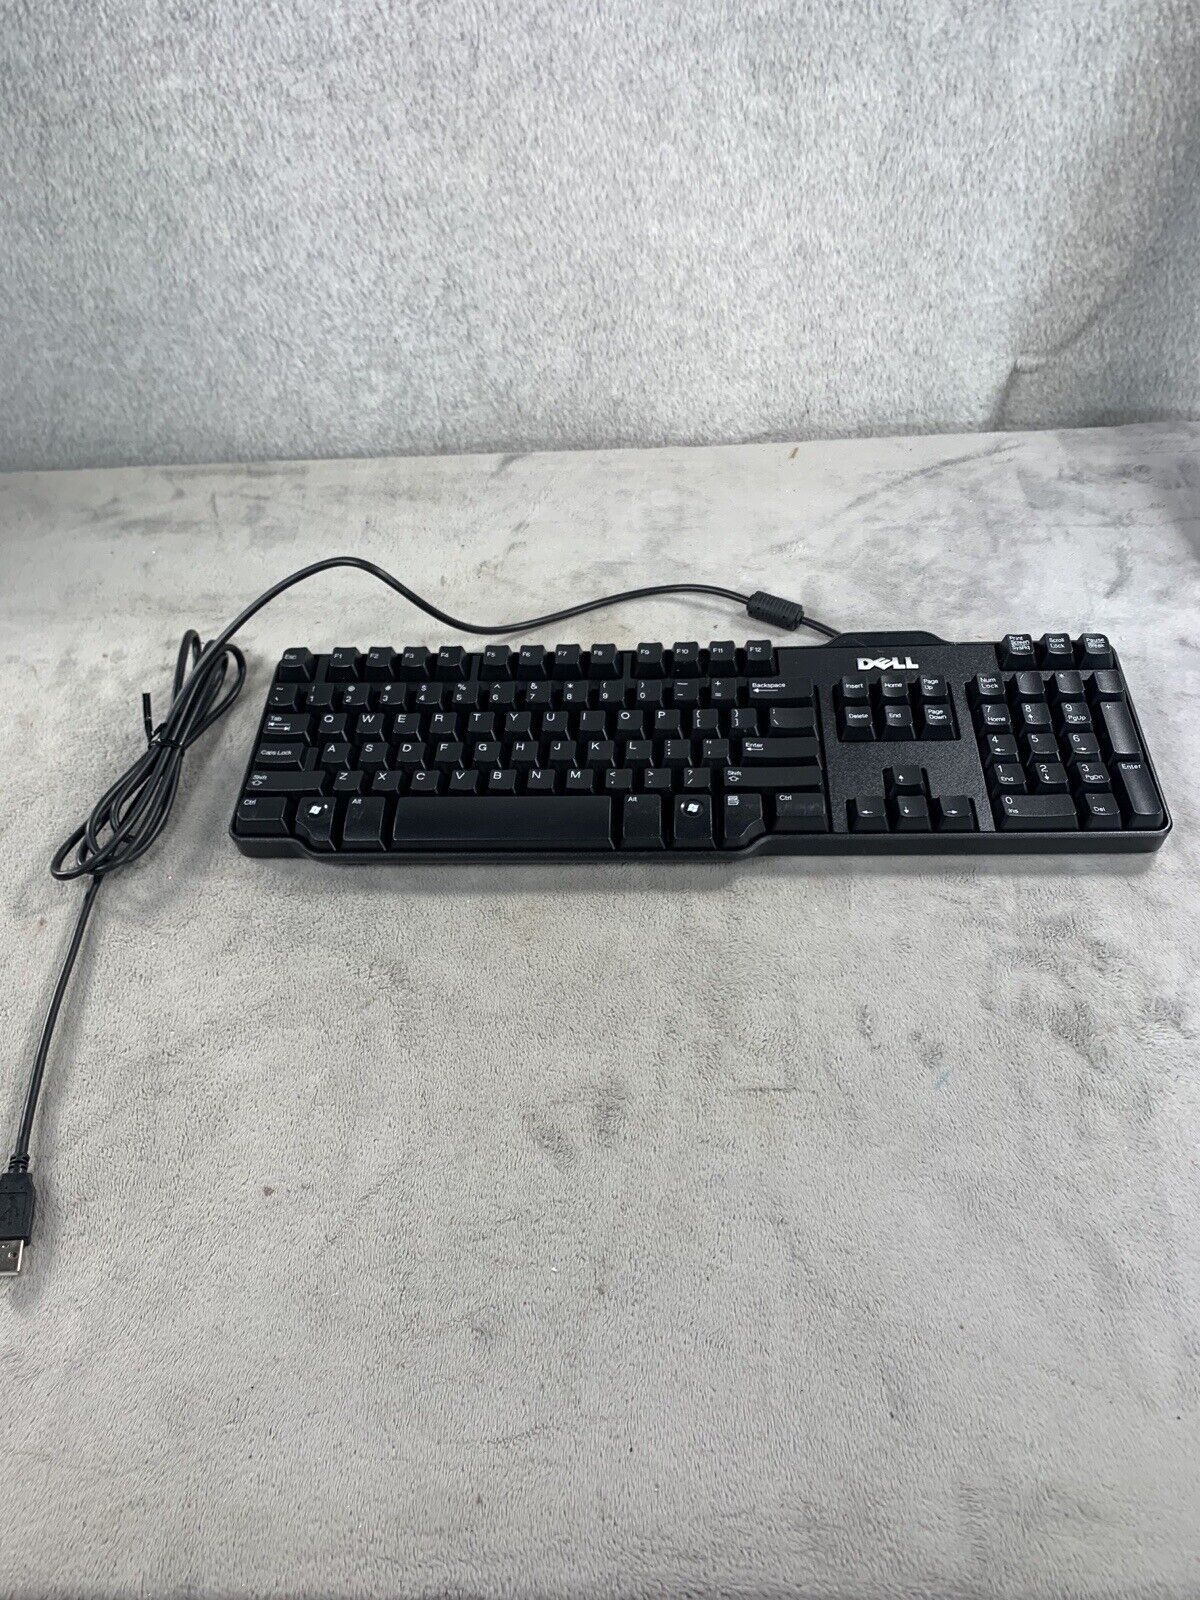 Dell Standard Wired USB Keyboard Model SK-8115 